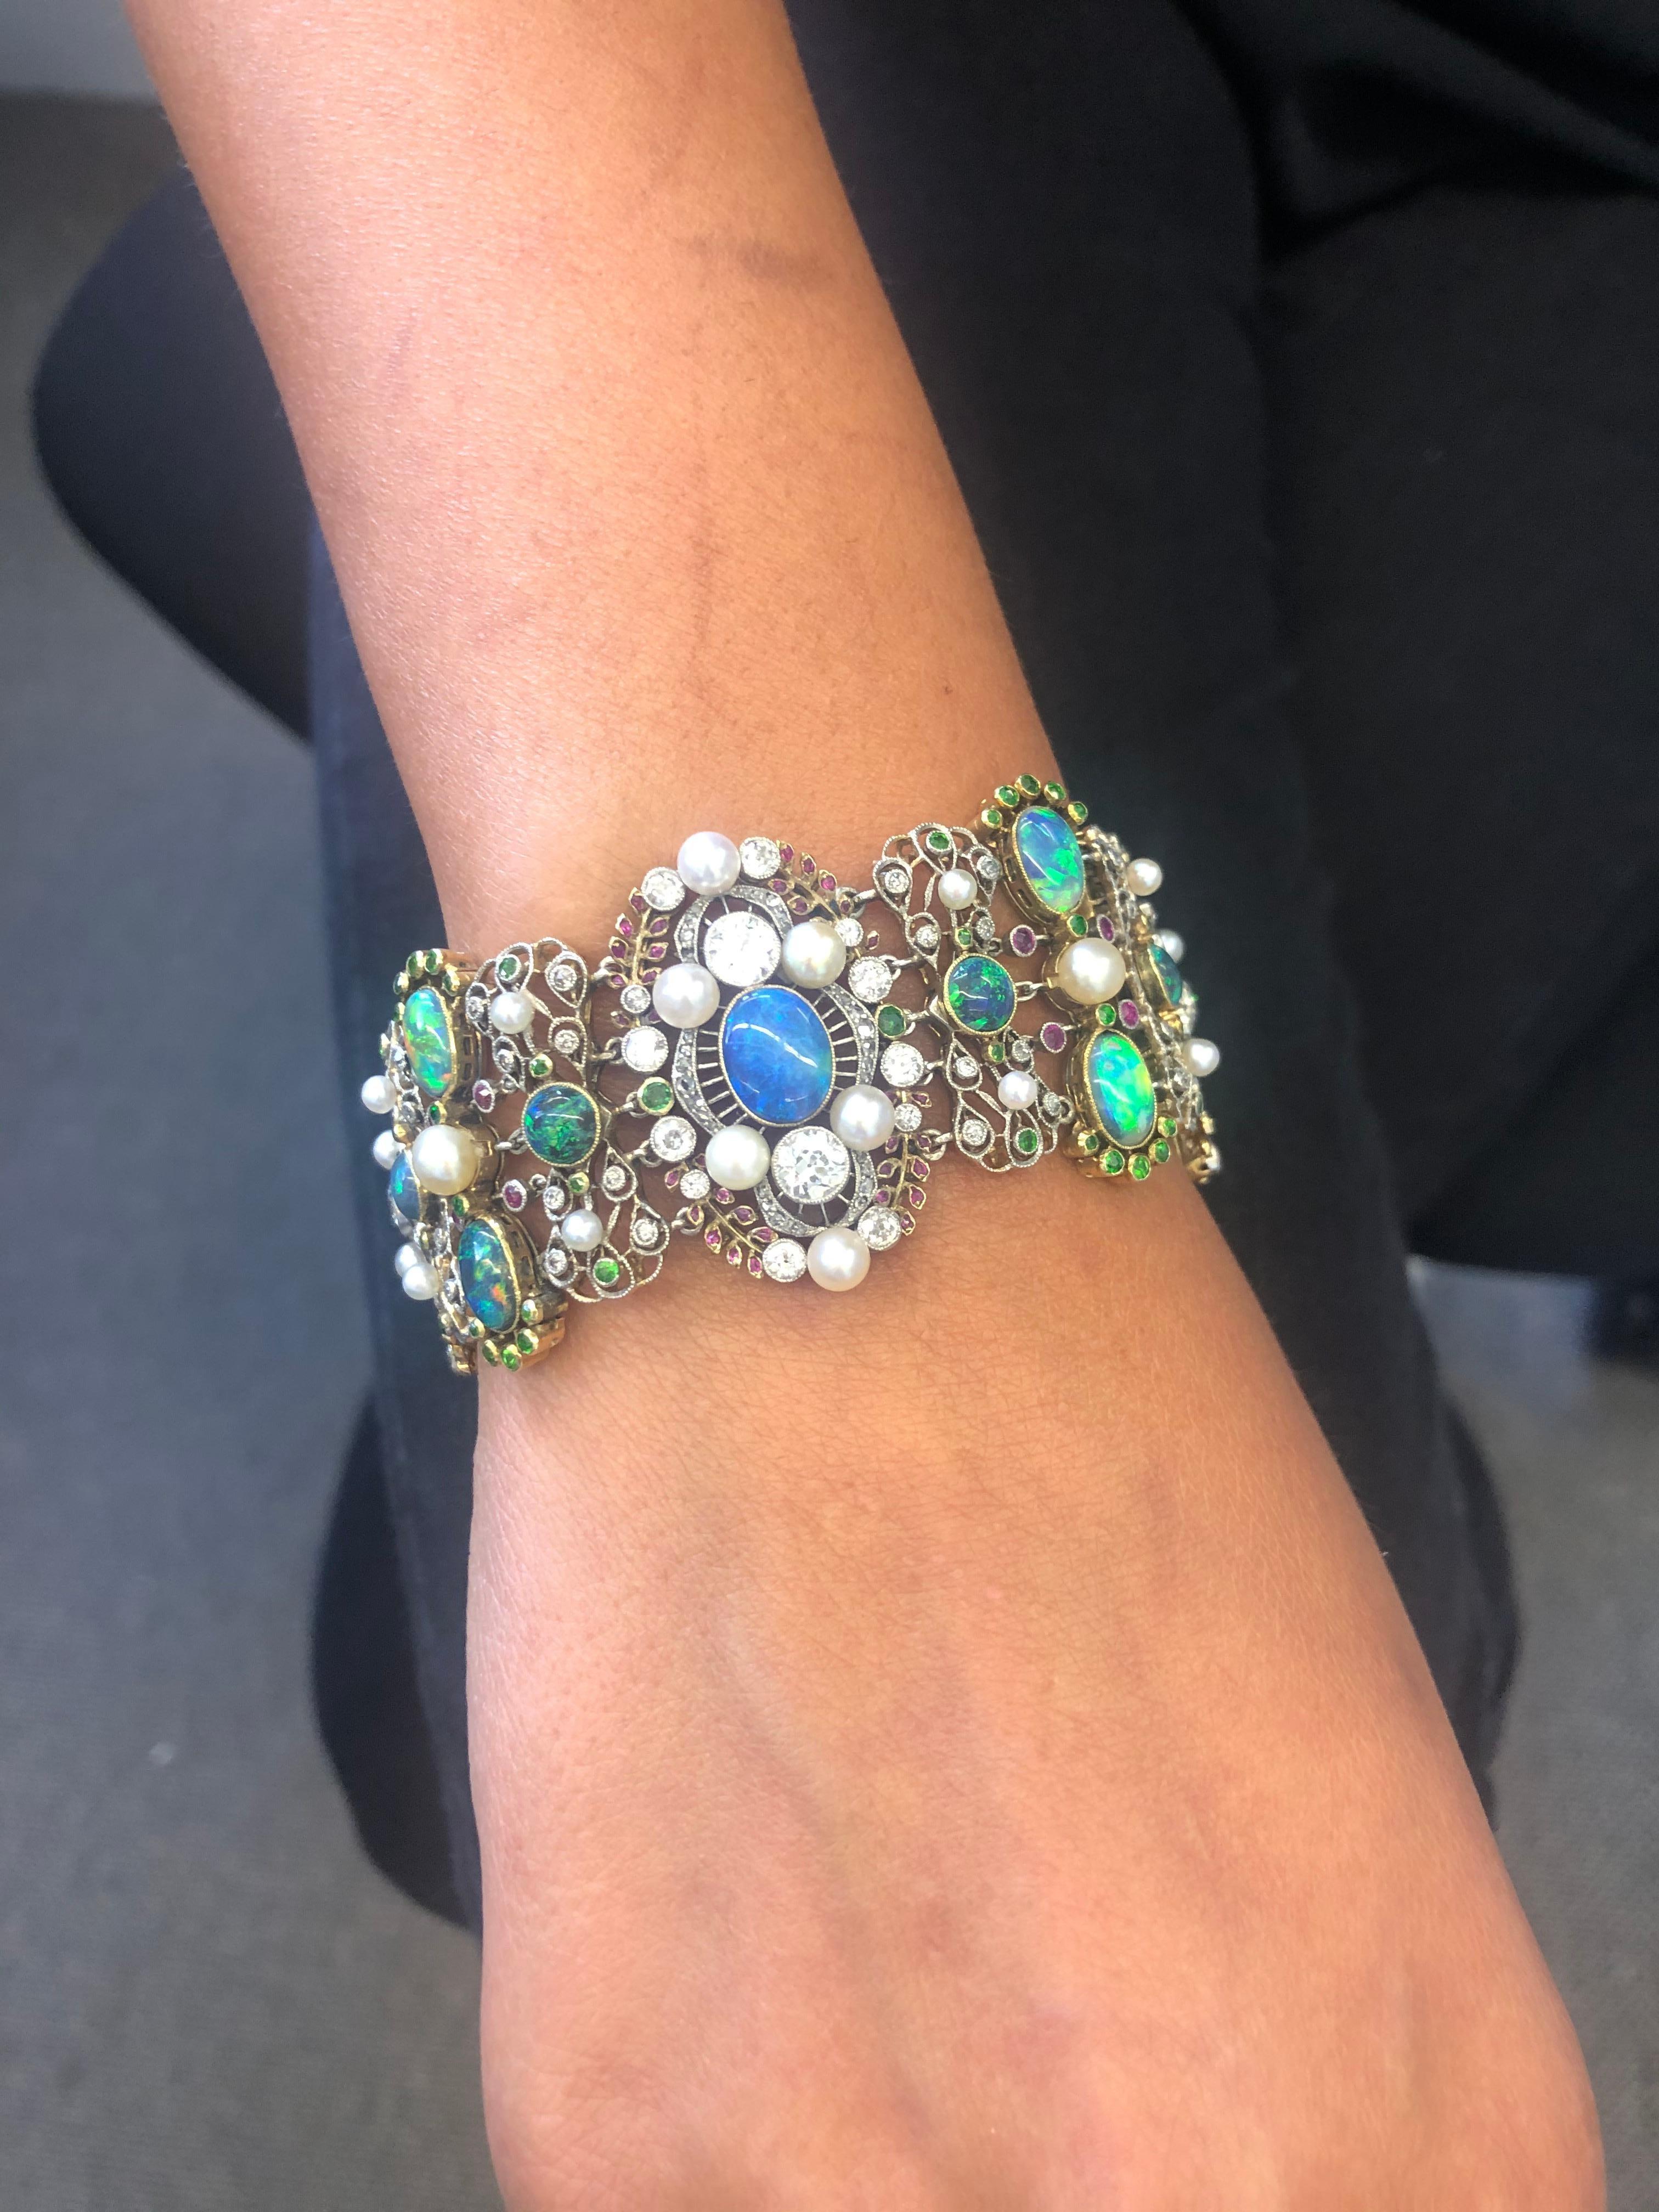 Belle Époque/Art Nouveau Bracelet with Opals, Pearls and Diamonds by Rothmuller For Sale 5